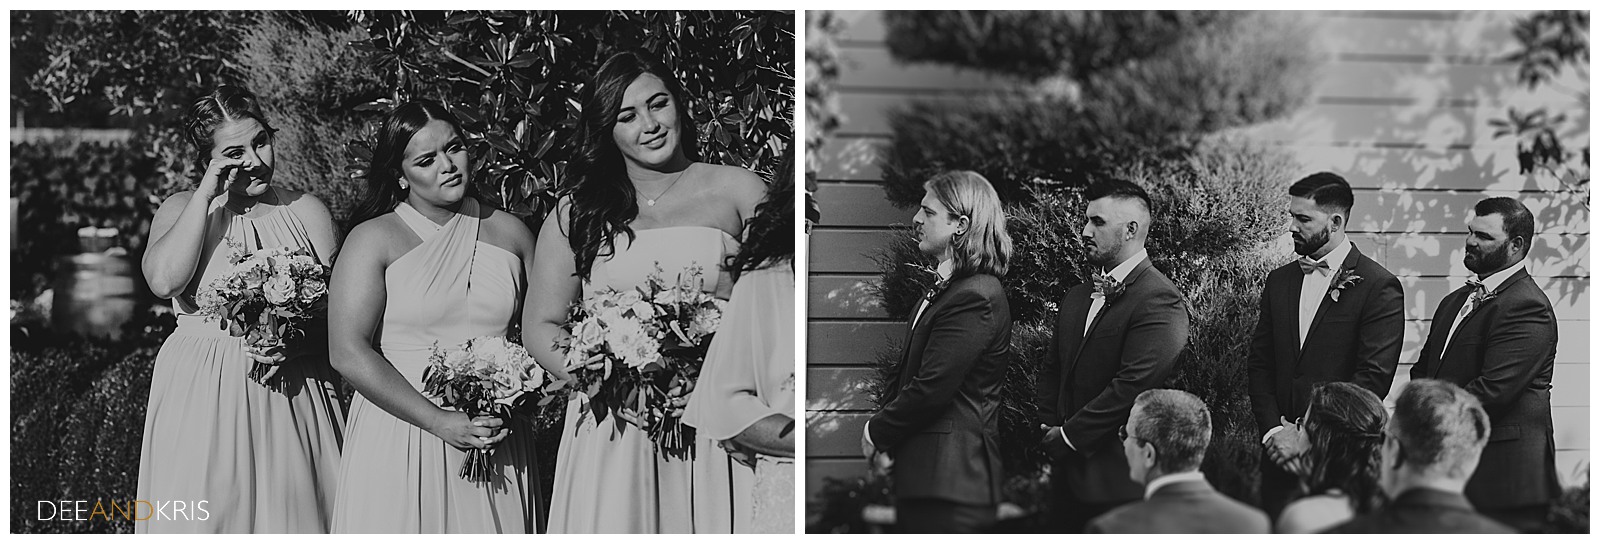 Scribner Bend Wedding Photographers, Sacramento Garden Venues, Dee and Kris Photography